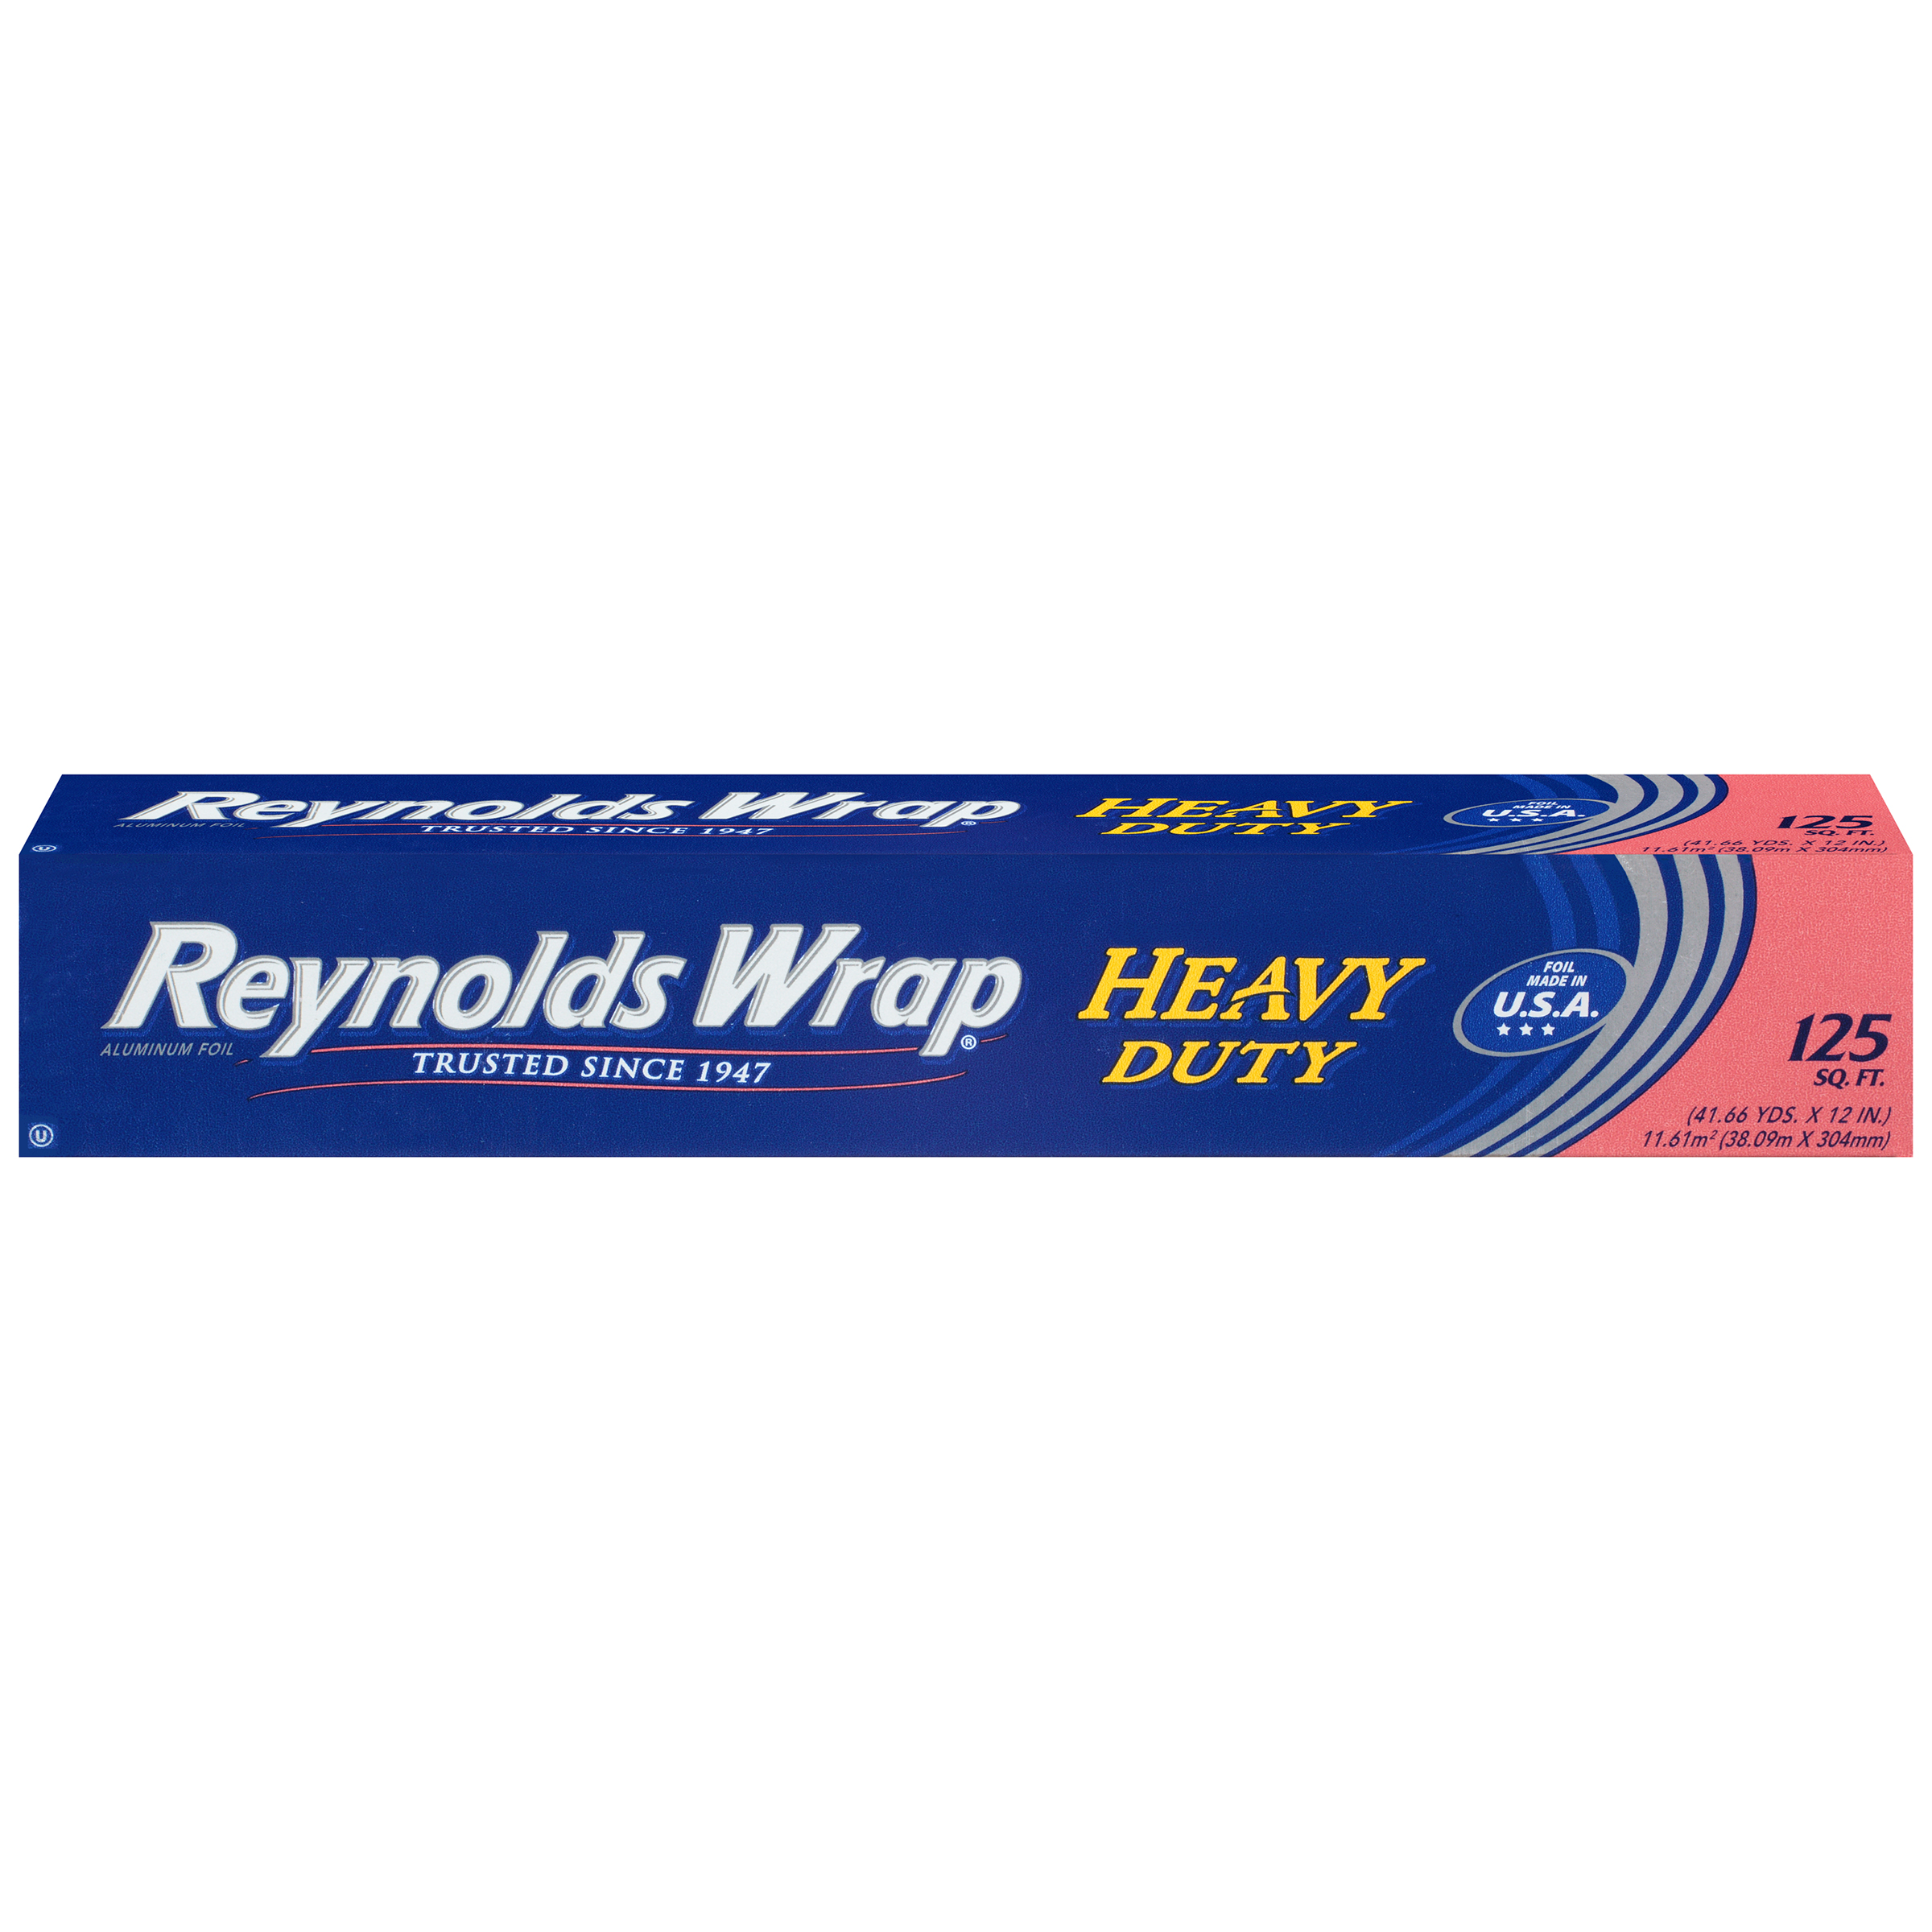 Reynolds Wrap Heavy Duty Aluminum Foil, 125 Square Feet - image 1 of 6